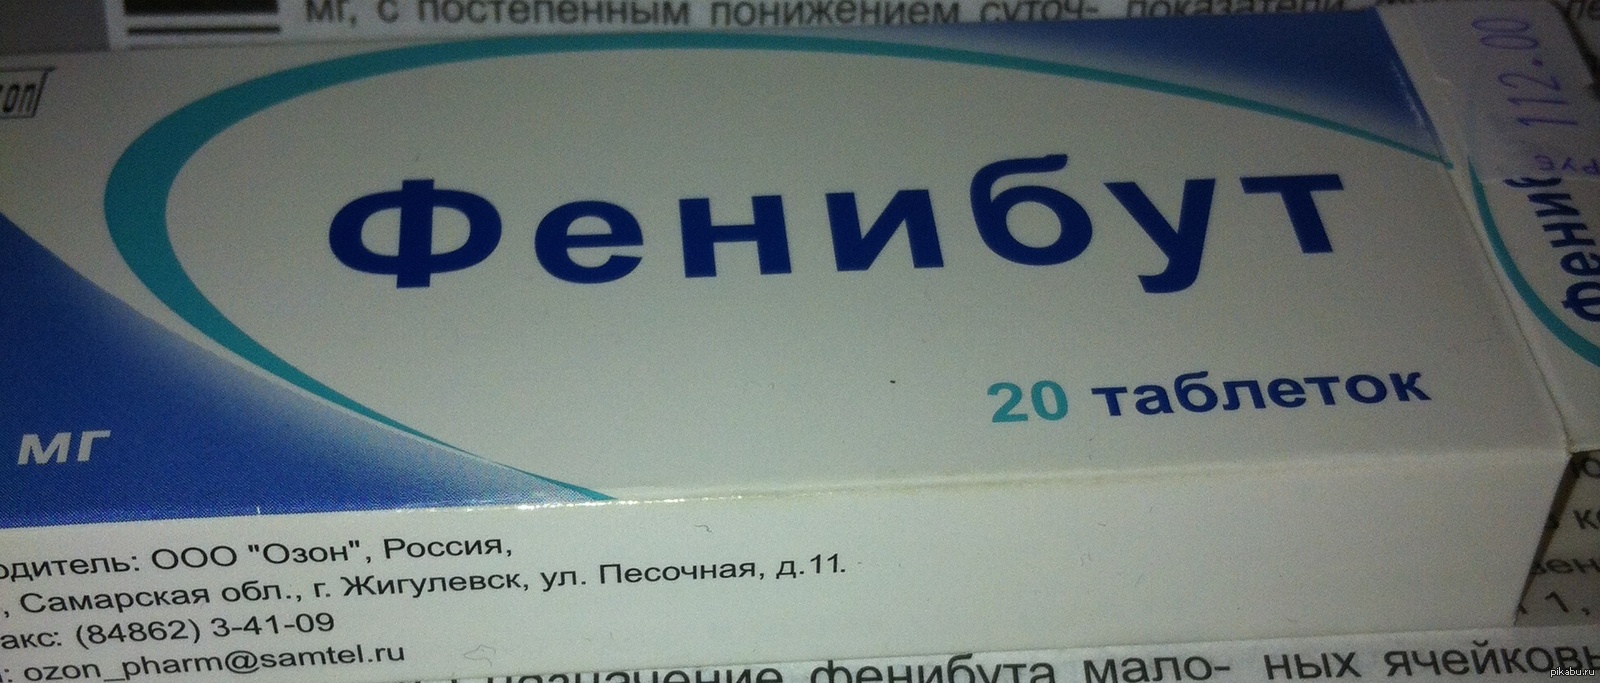 Фенибут форум врачей. Фенибут 250 мг Озон. Фенибут таблетки Латвия. Фенибут 750 мг. Фенибут производители.